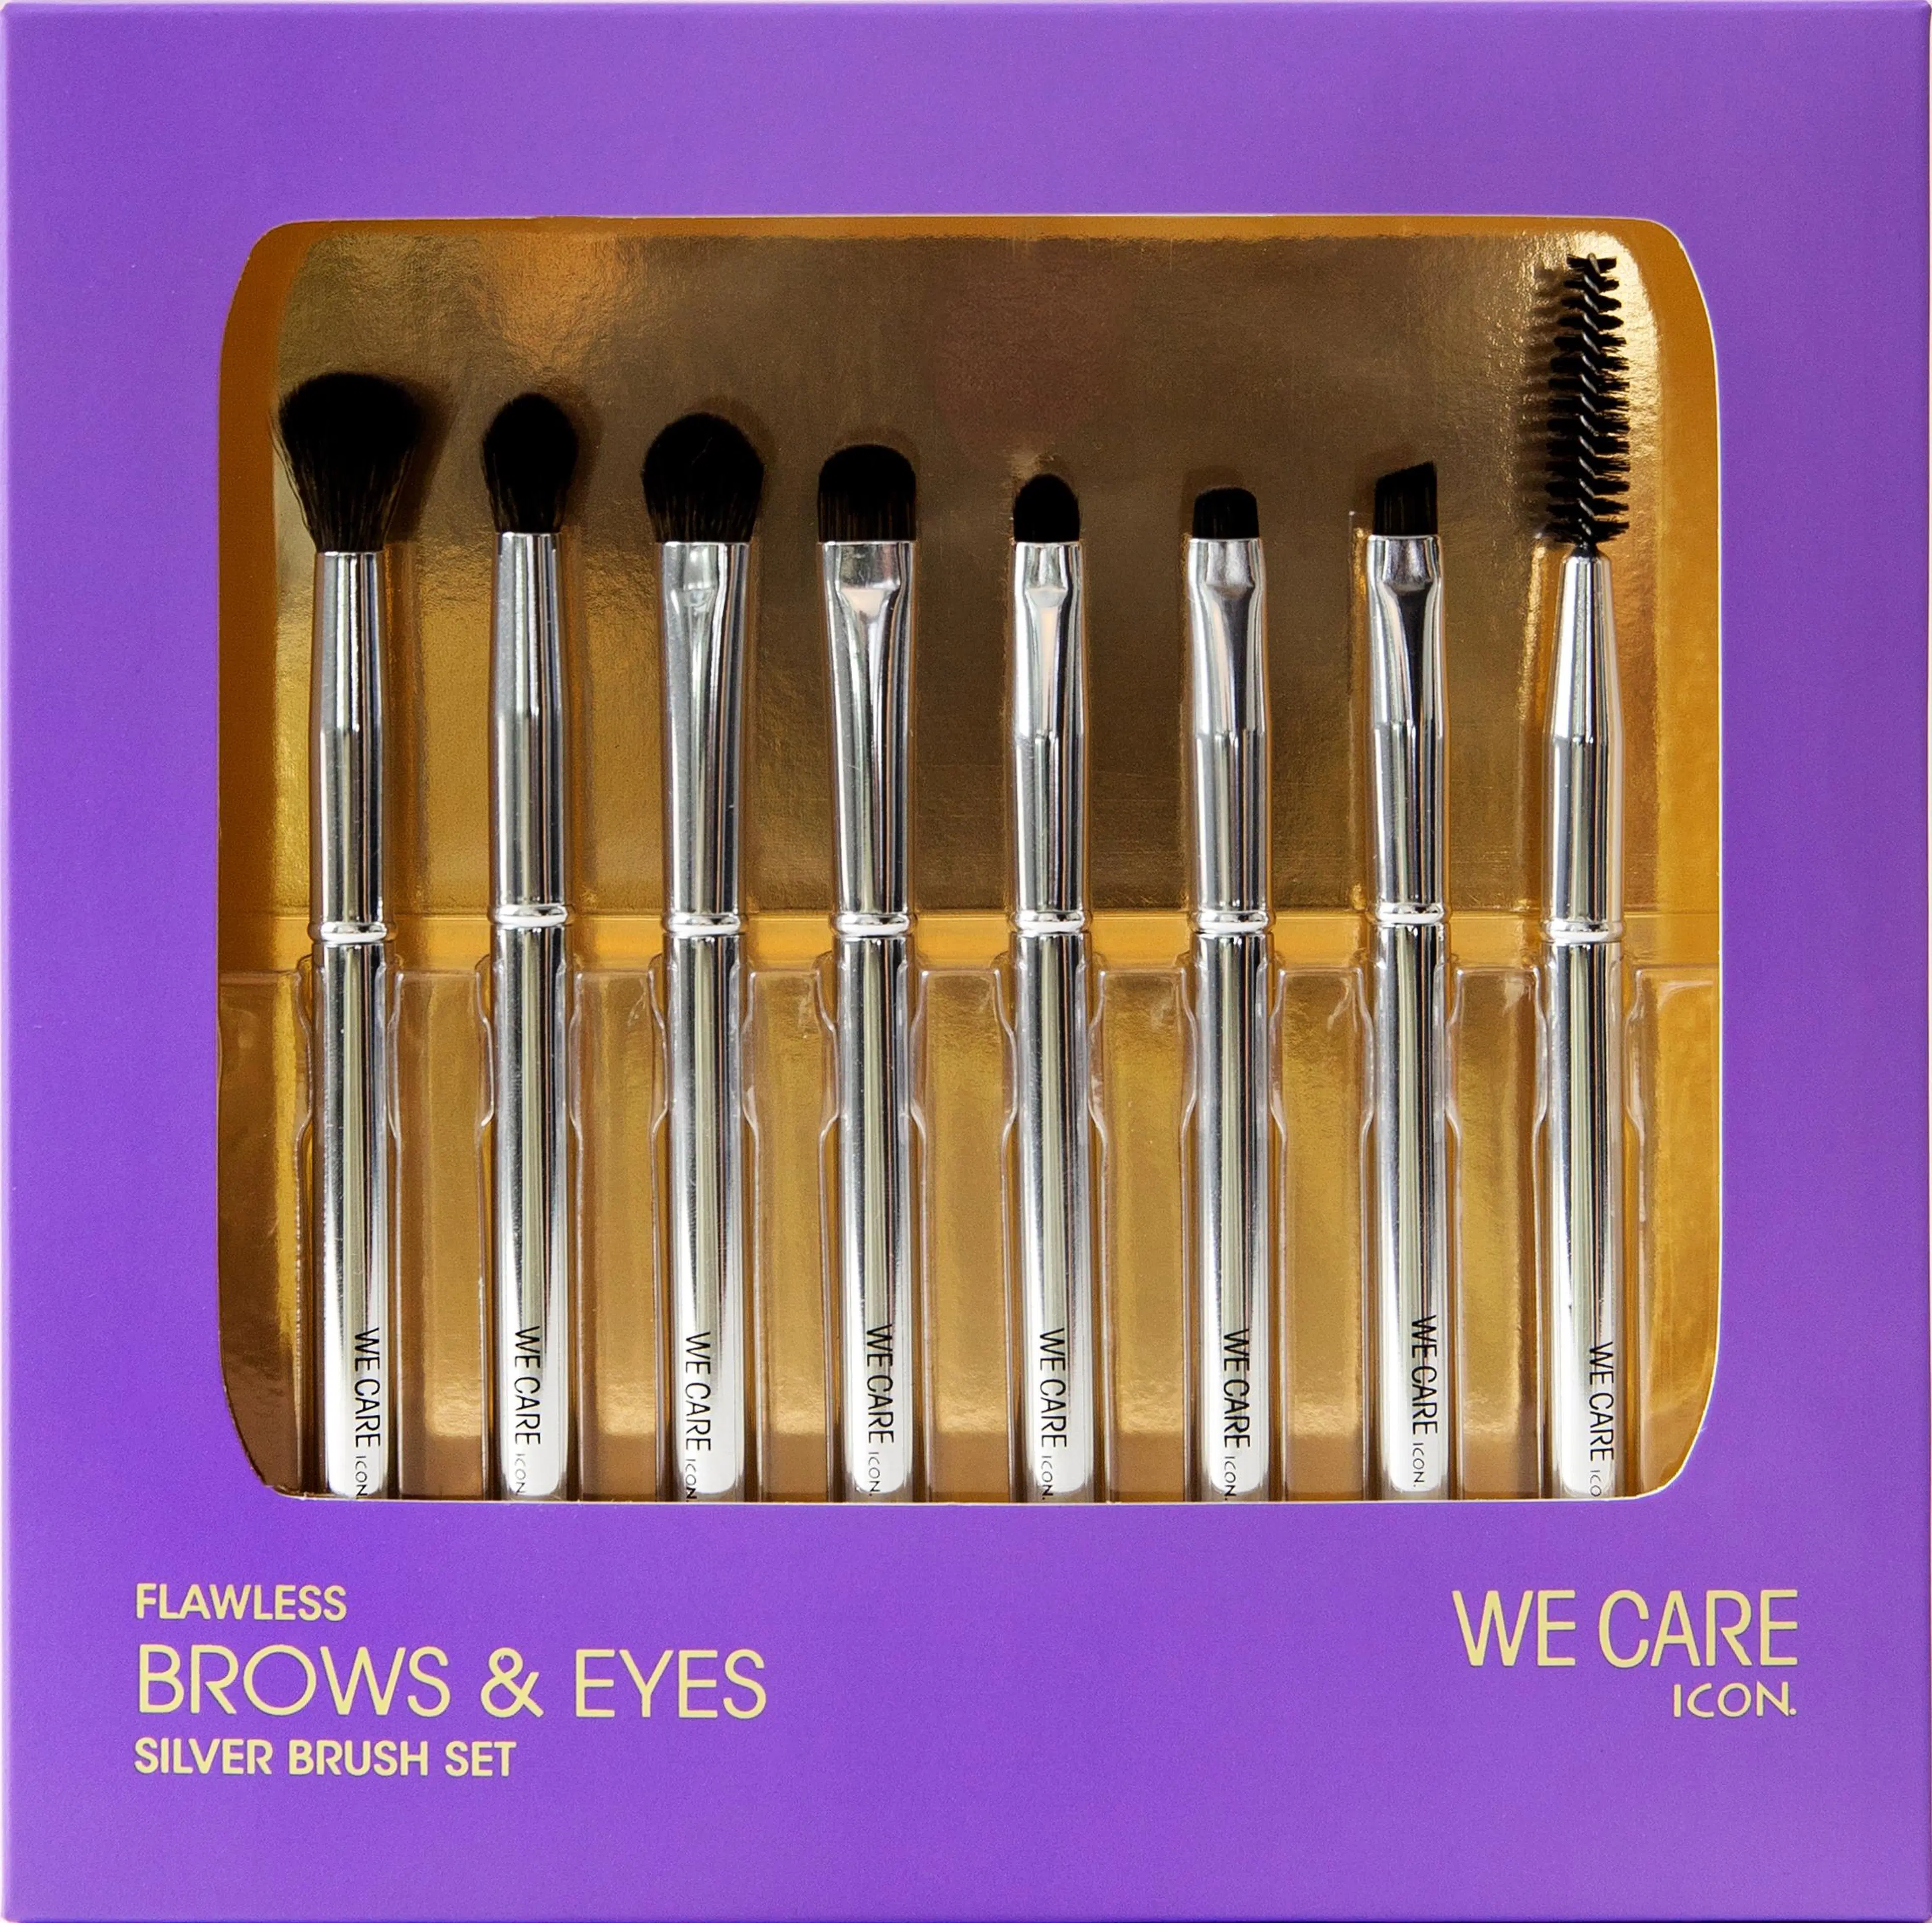 We Care Icon Flawless Brows & Eyes Brush Set silmämeikkisivellin 8kpl